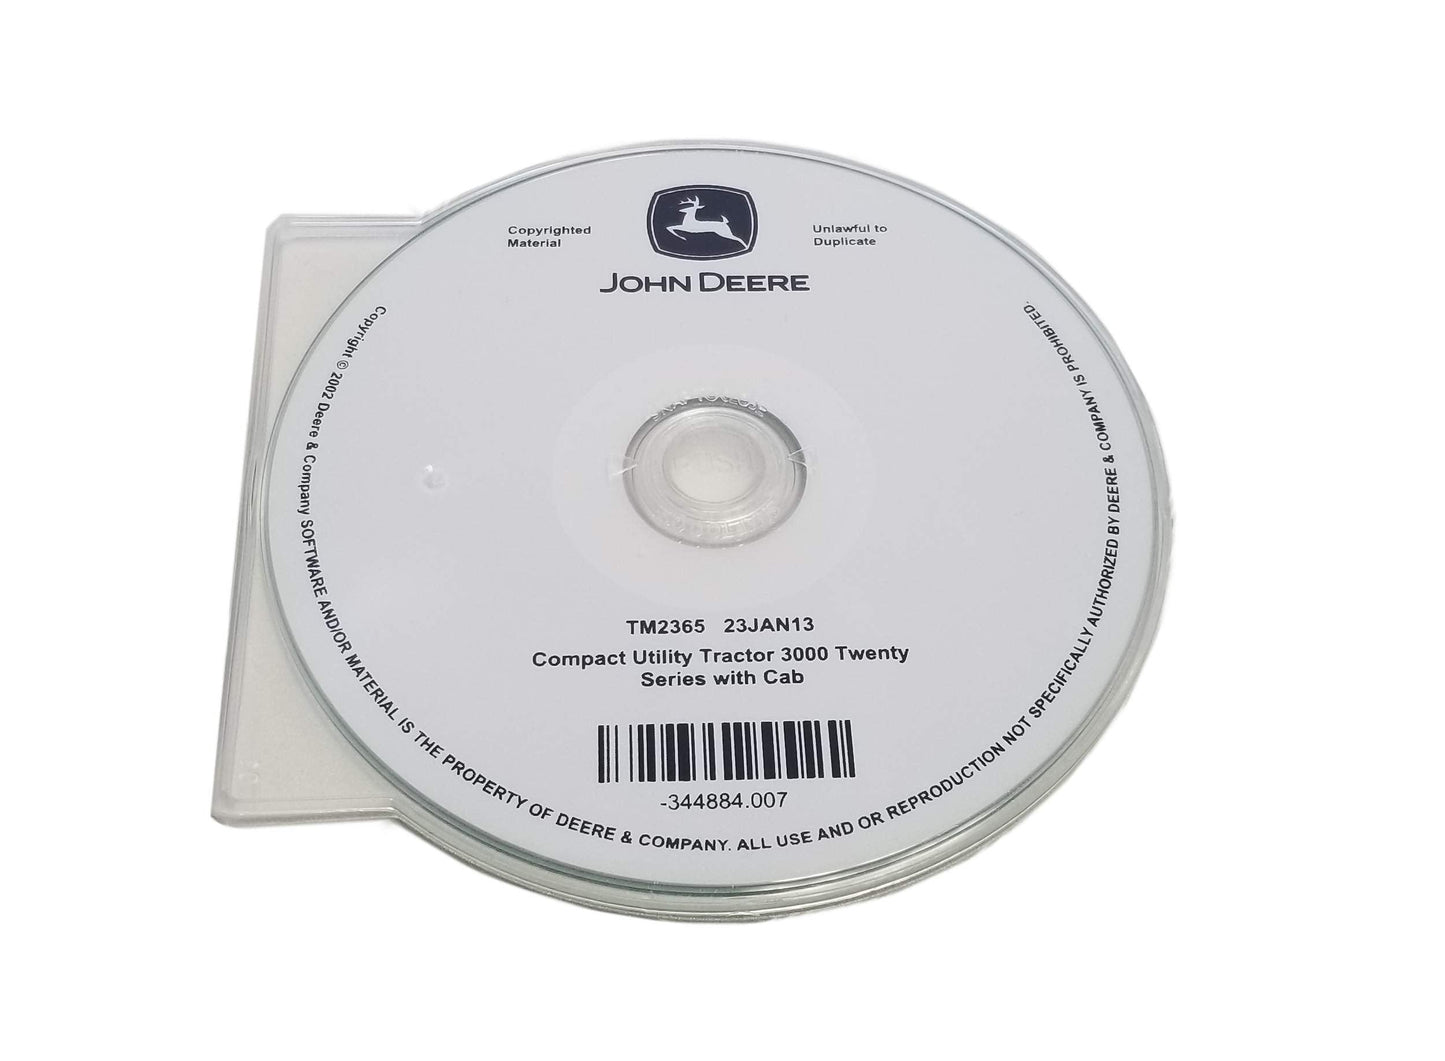 John Deere 3120/3320/3520/3720 Compact Utility Tractor w/ Cab Technical Manual CD - TM2365CD